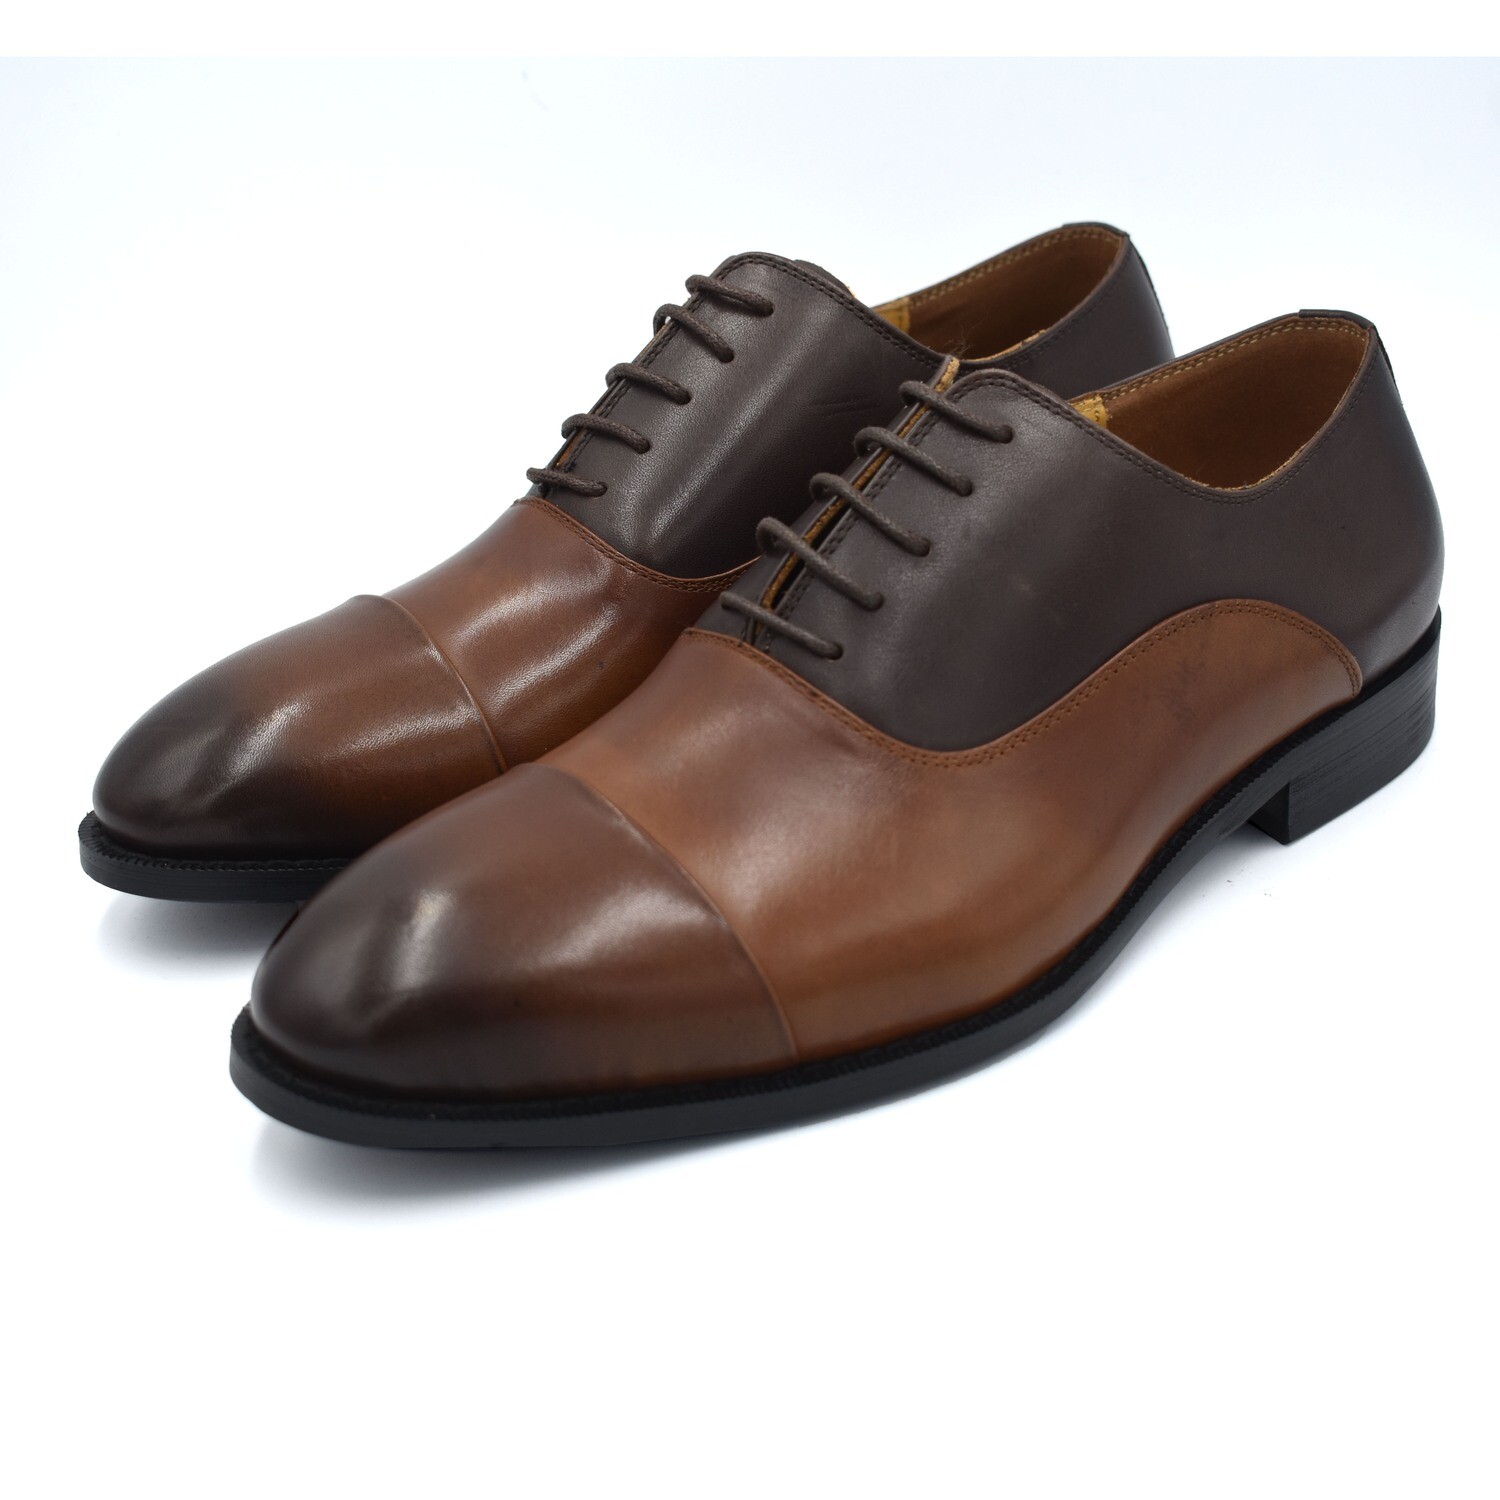 Cavana genuine leather Oxford formal shoes for men